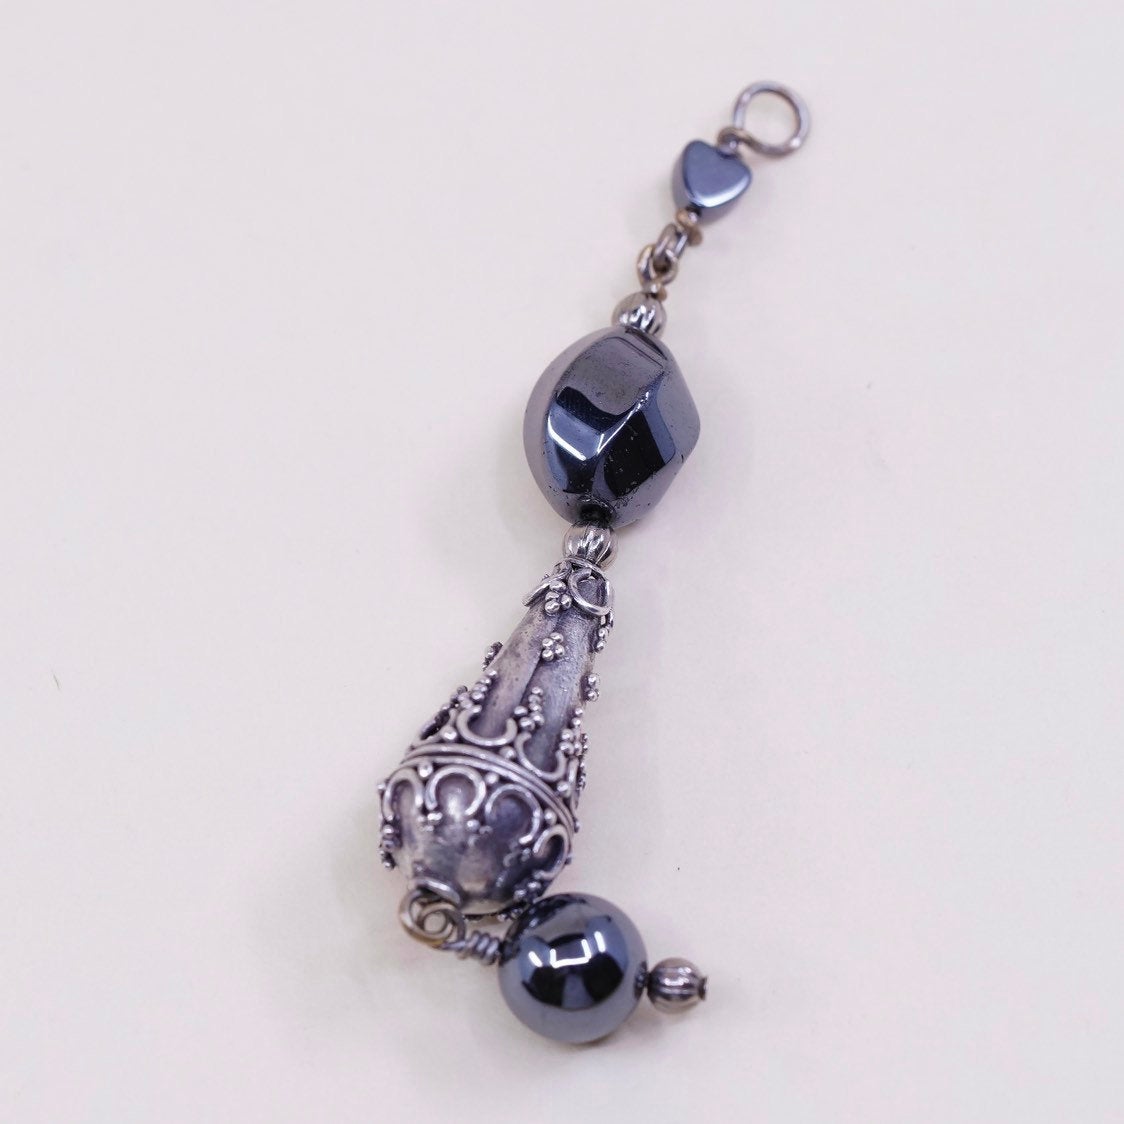 VTG Bali sterling silver handmade pendant, 925 teardrop charm w/ hematite